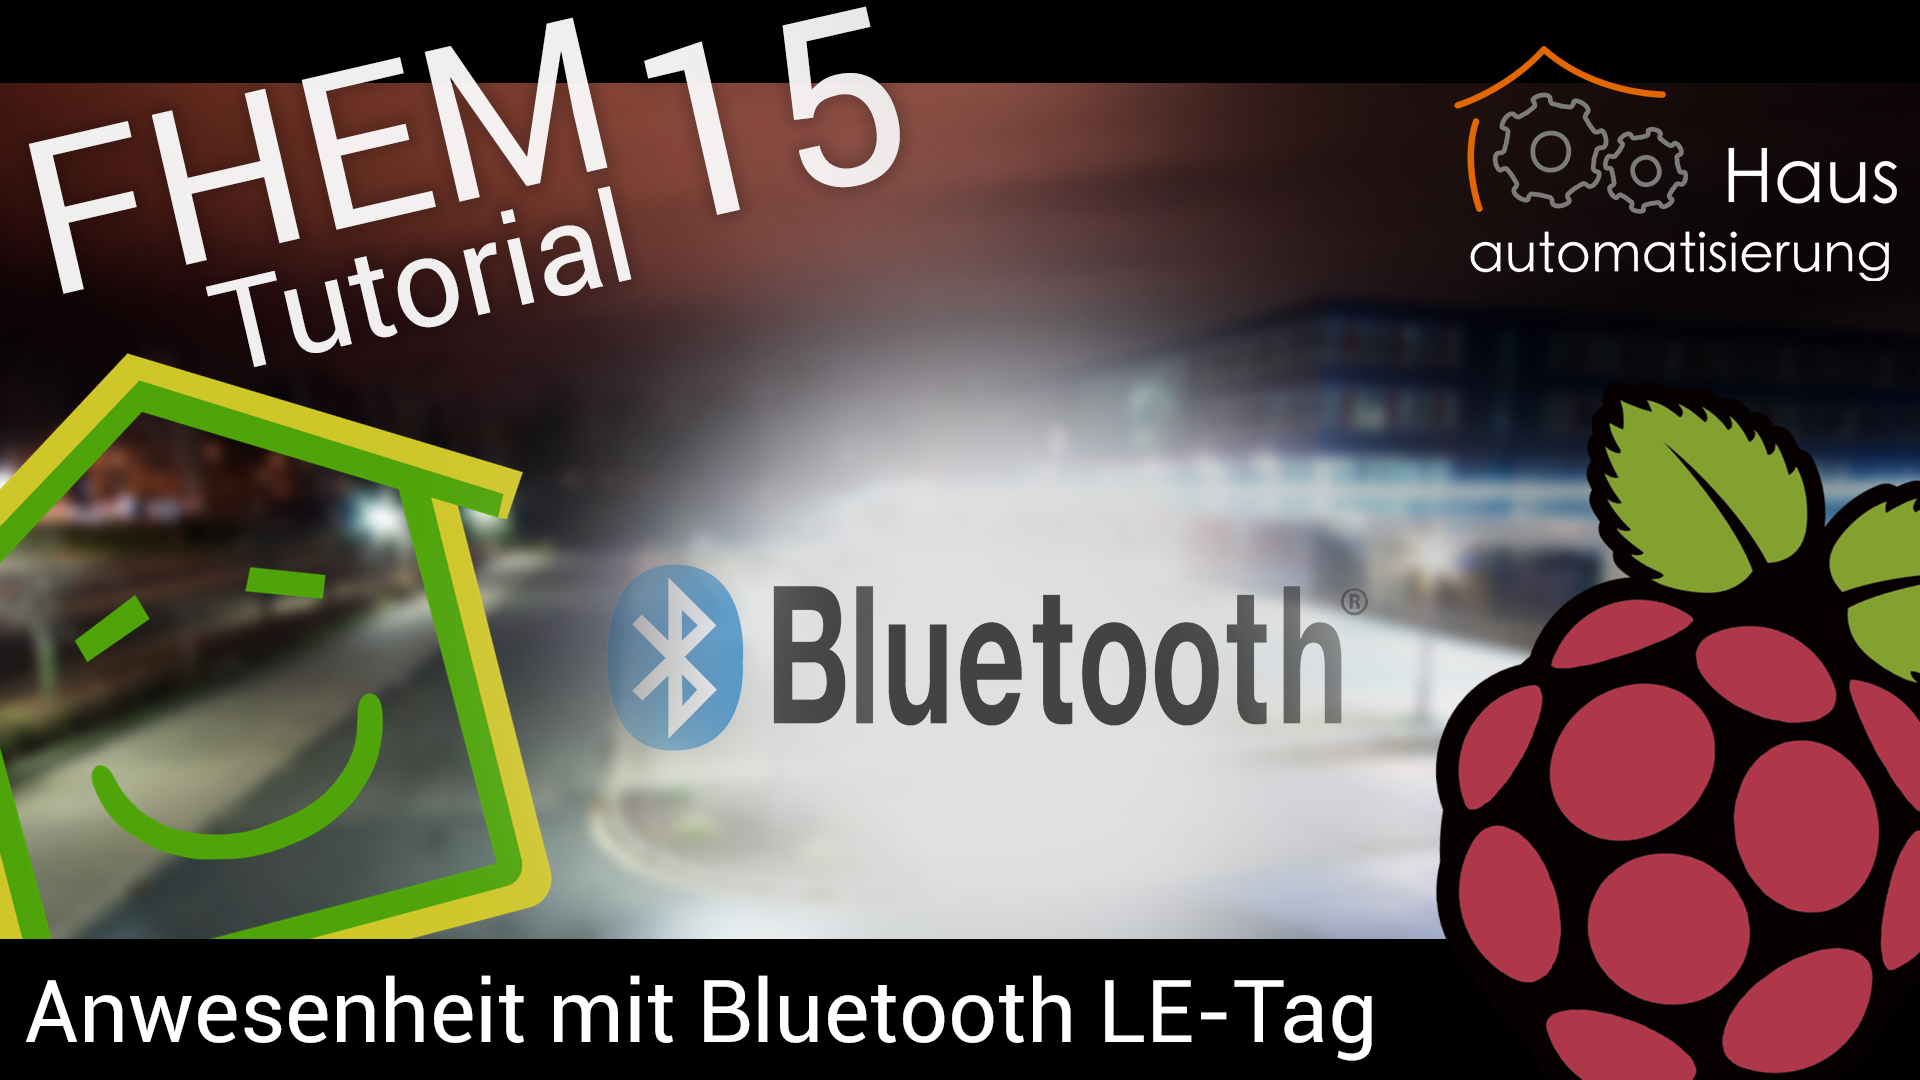 FHEM Tutorial-Reihe - Part 15: Anwesenheit mit Bluetooth LE Tag ermitteln